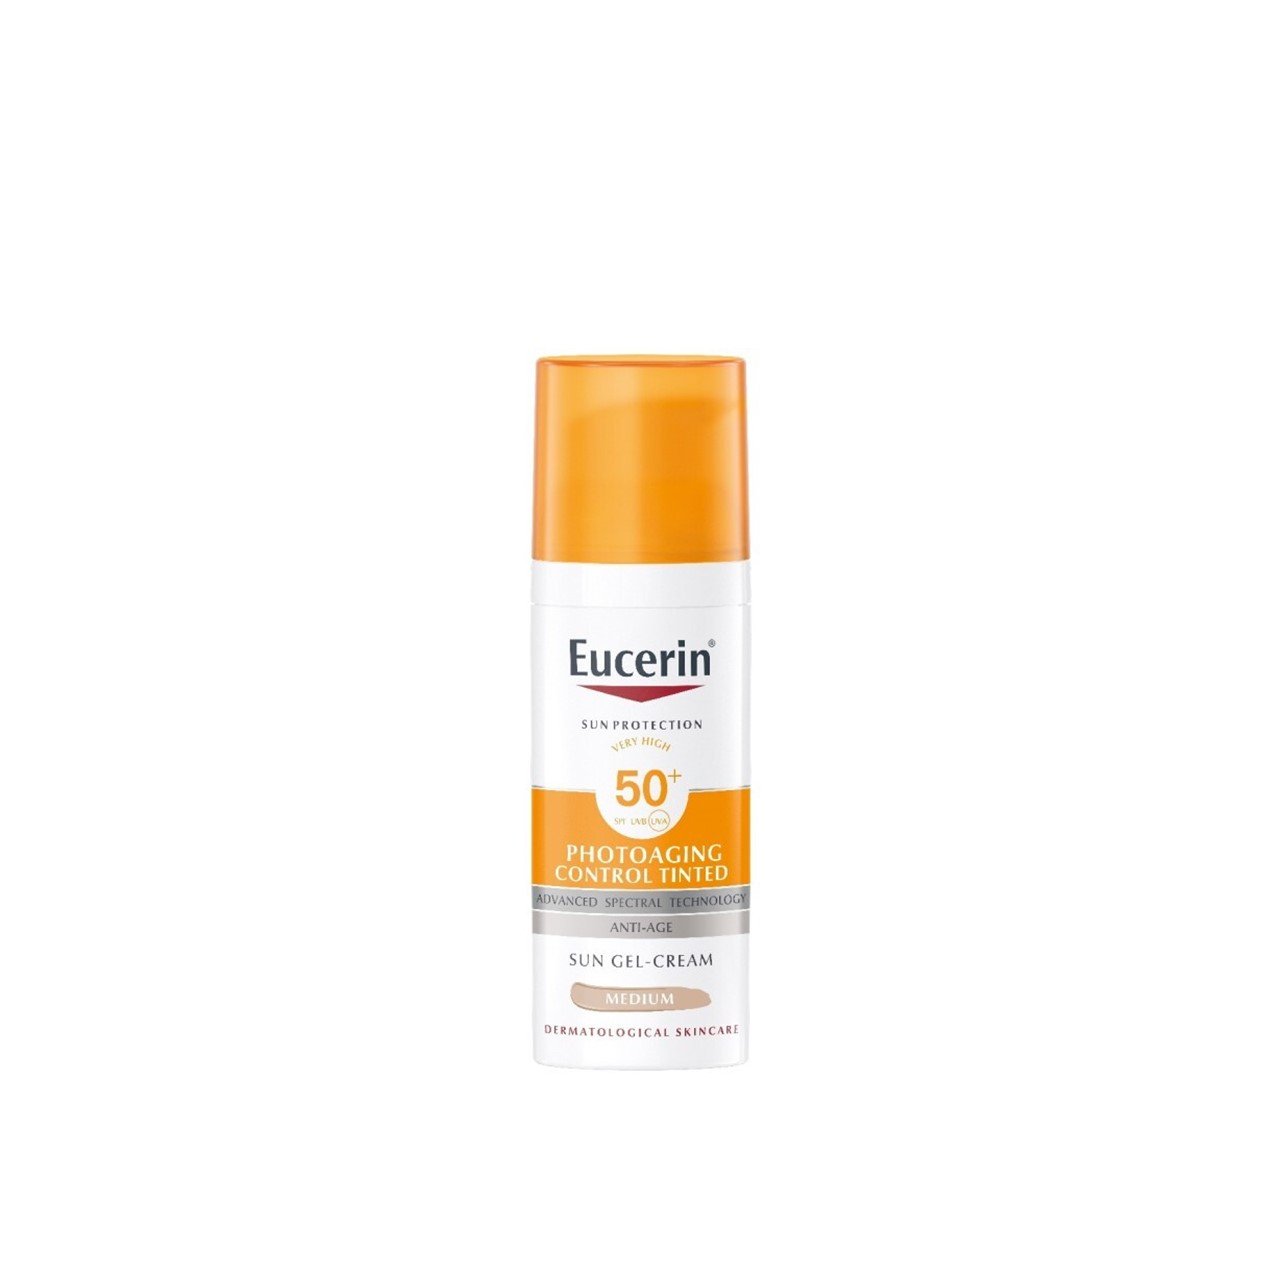 Eucerin Sun Photoaging Control Tinted Gel-Cream SPF50+ Medium 50ml (1.69floz)